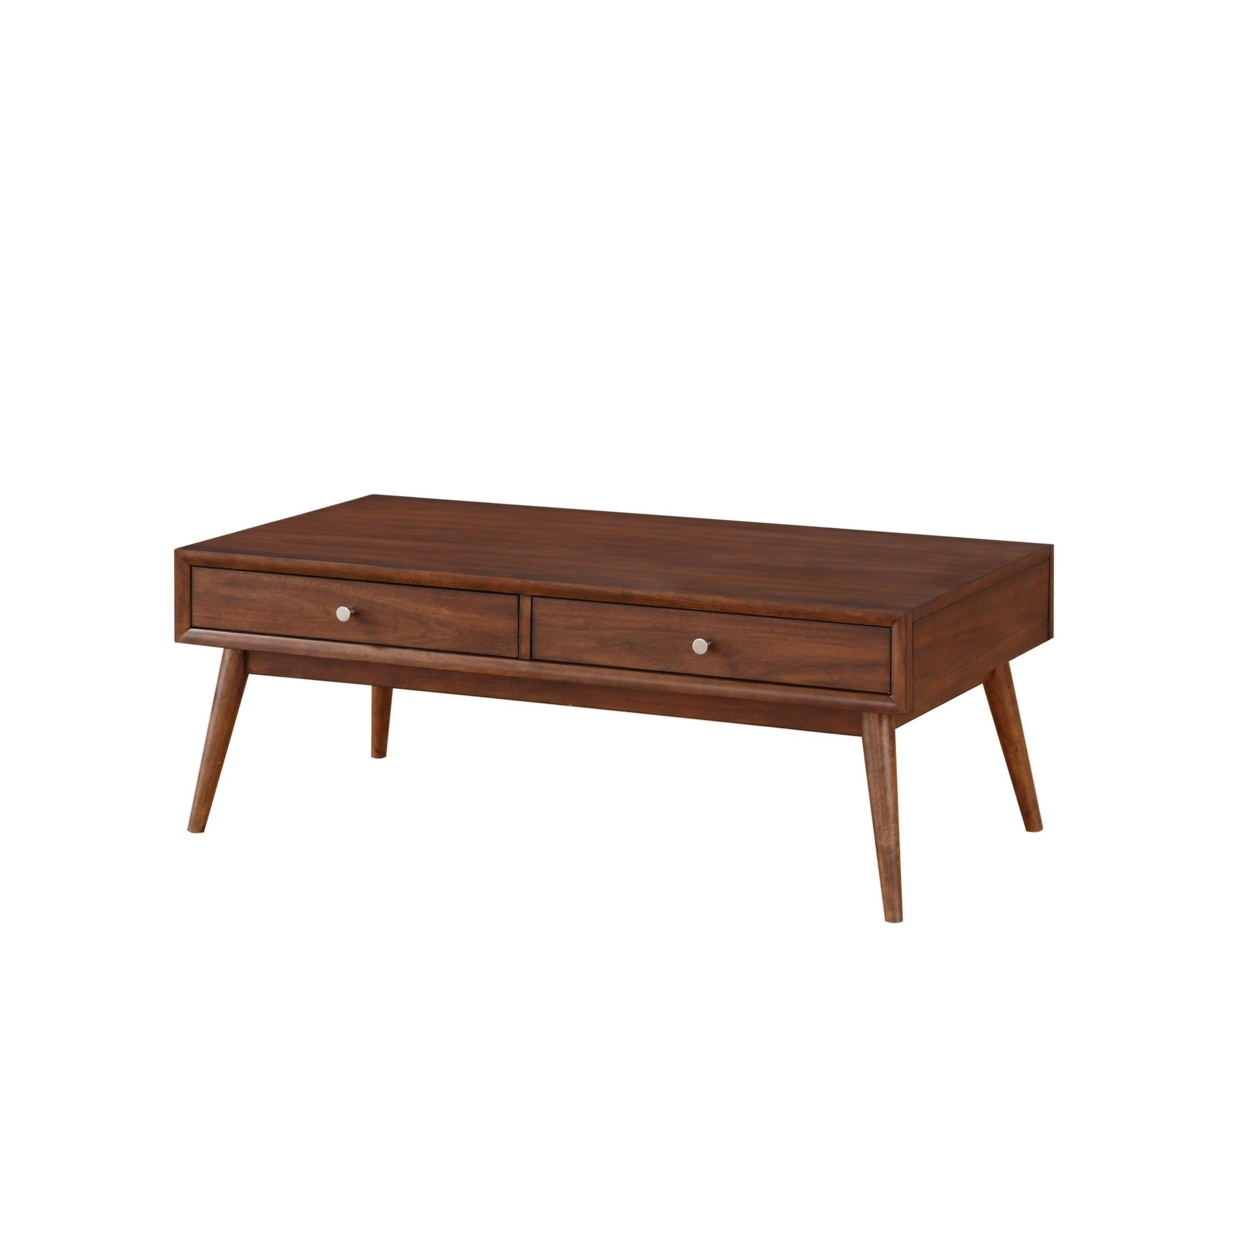 2 Drawer Wooden Coffee Table With Splayed Legs, Walnut Brown- Saltoro Sherpi